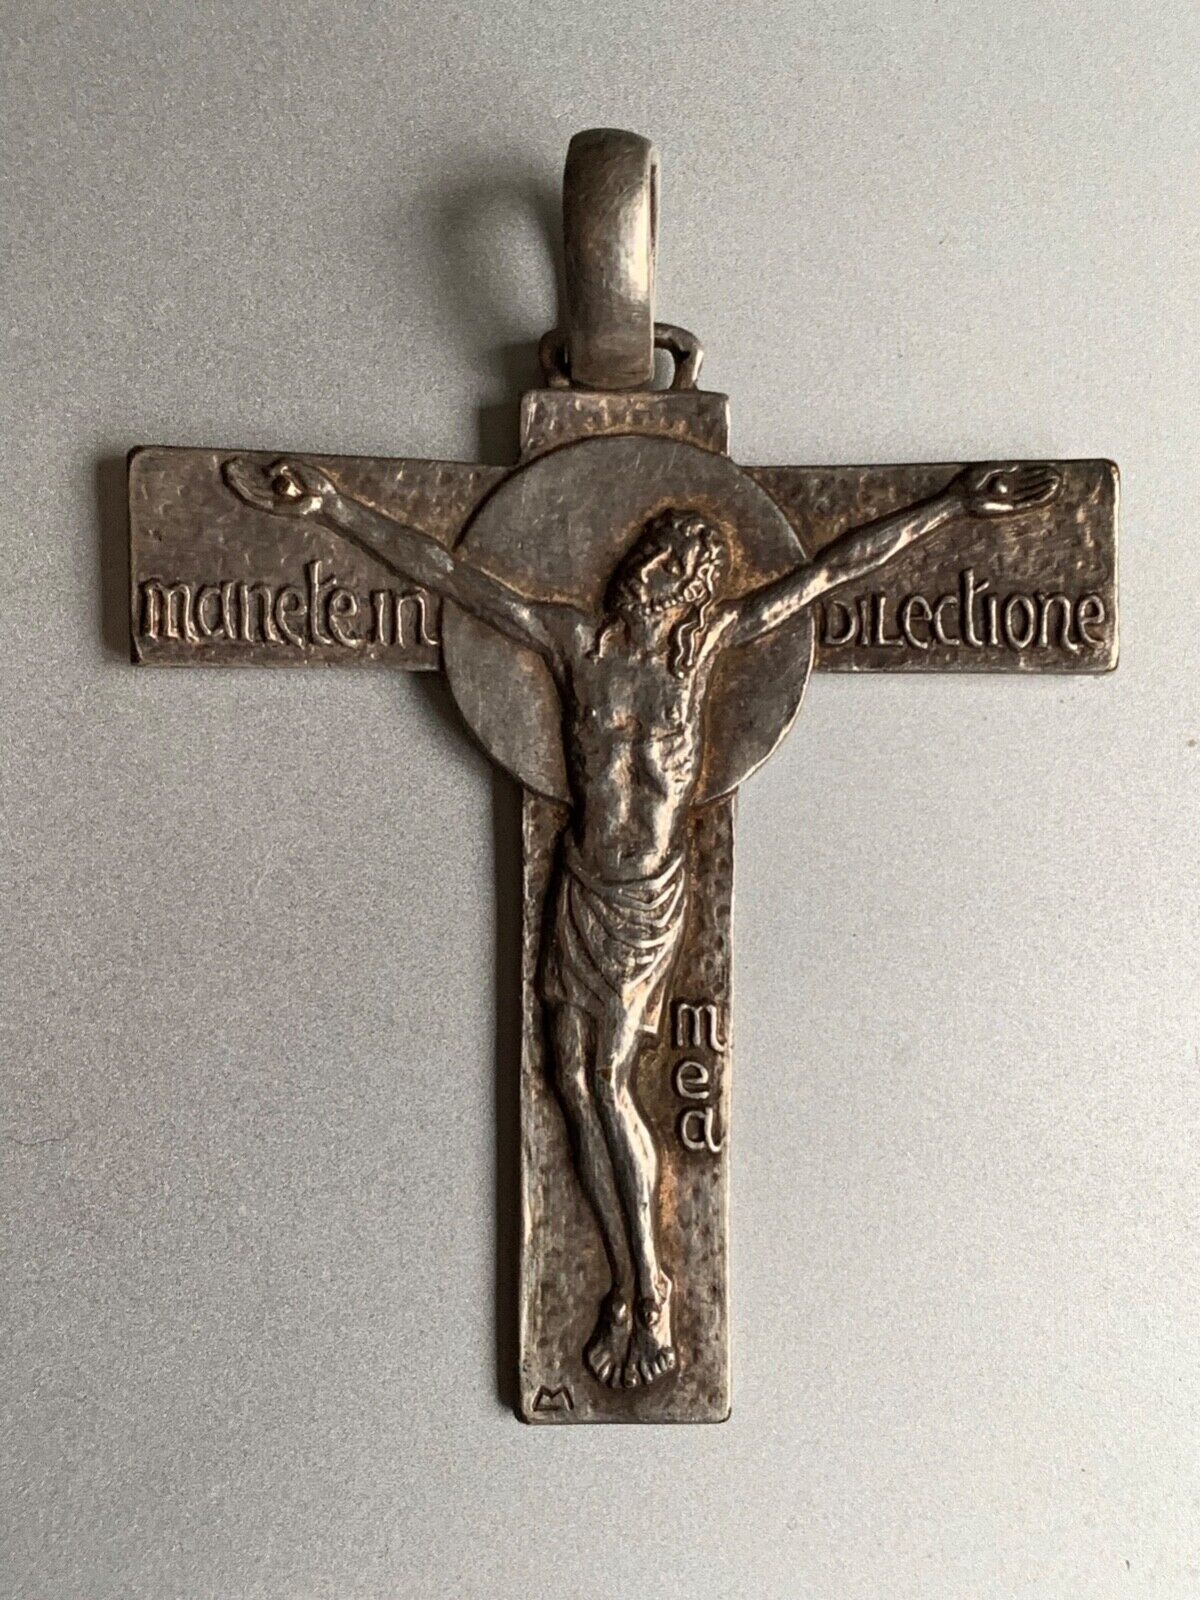 Important Antique Religious Silver Pendant -7cm - Manetein Dilectione Mea